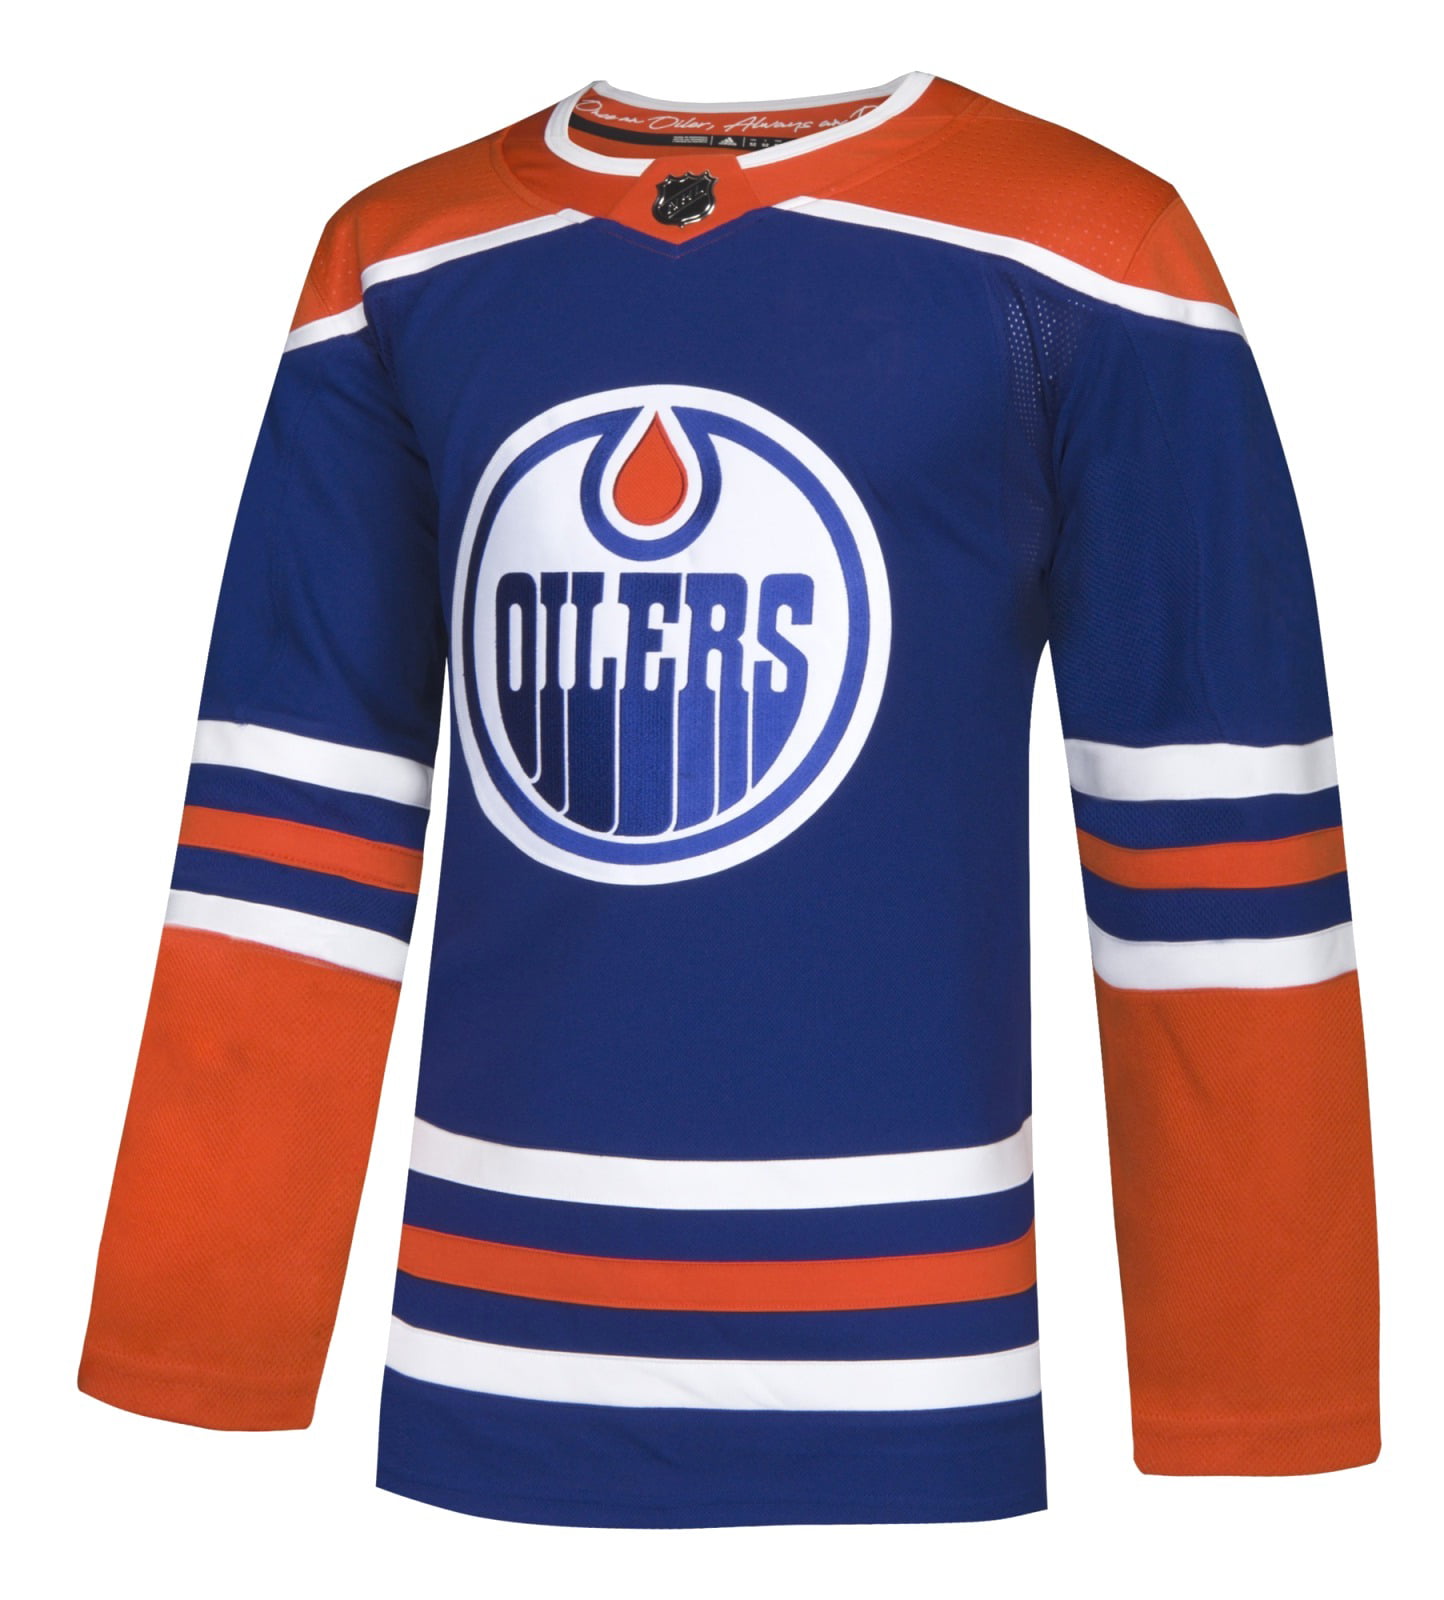 Adidas - Edmonton Oilers Adidas NHL Men's Climalite Authentic Alternate Hockey Jersey - Walmart.com